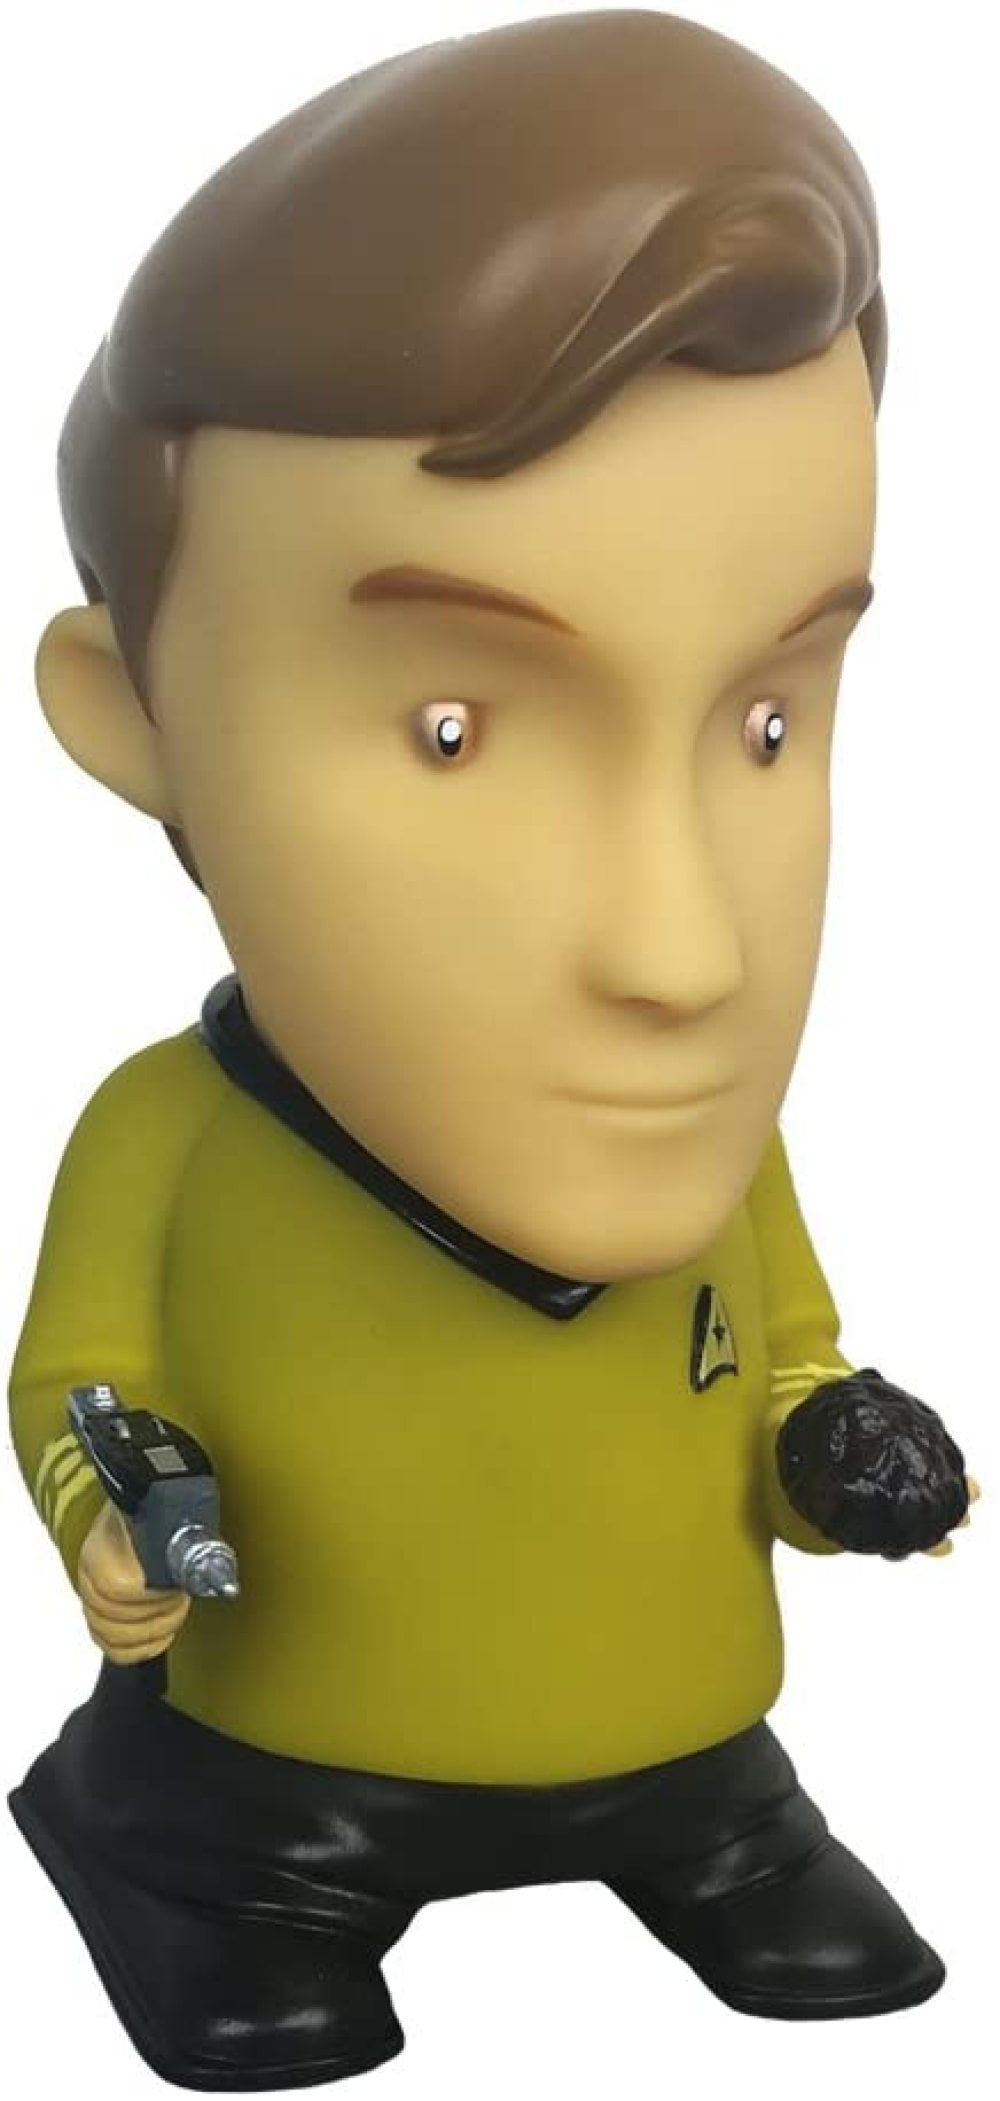 Star Trek Captain Kirk Bluetooth Speaker William Shatner Talks Voice Clips 6in. 